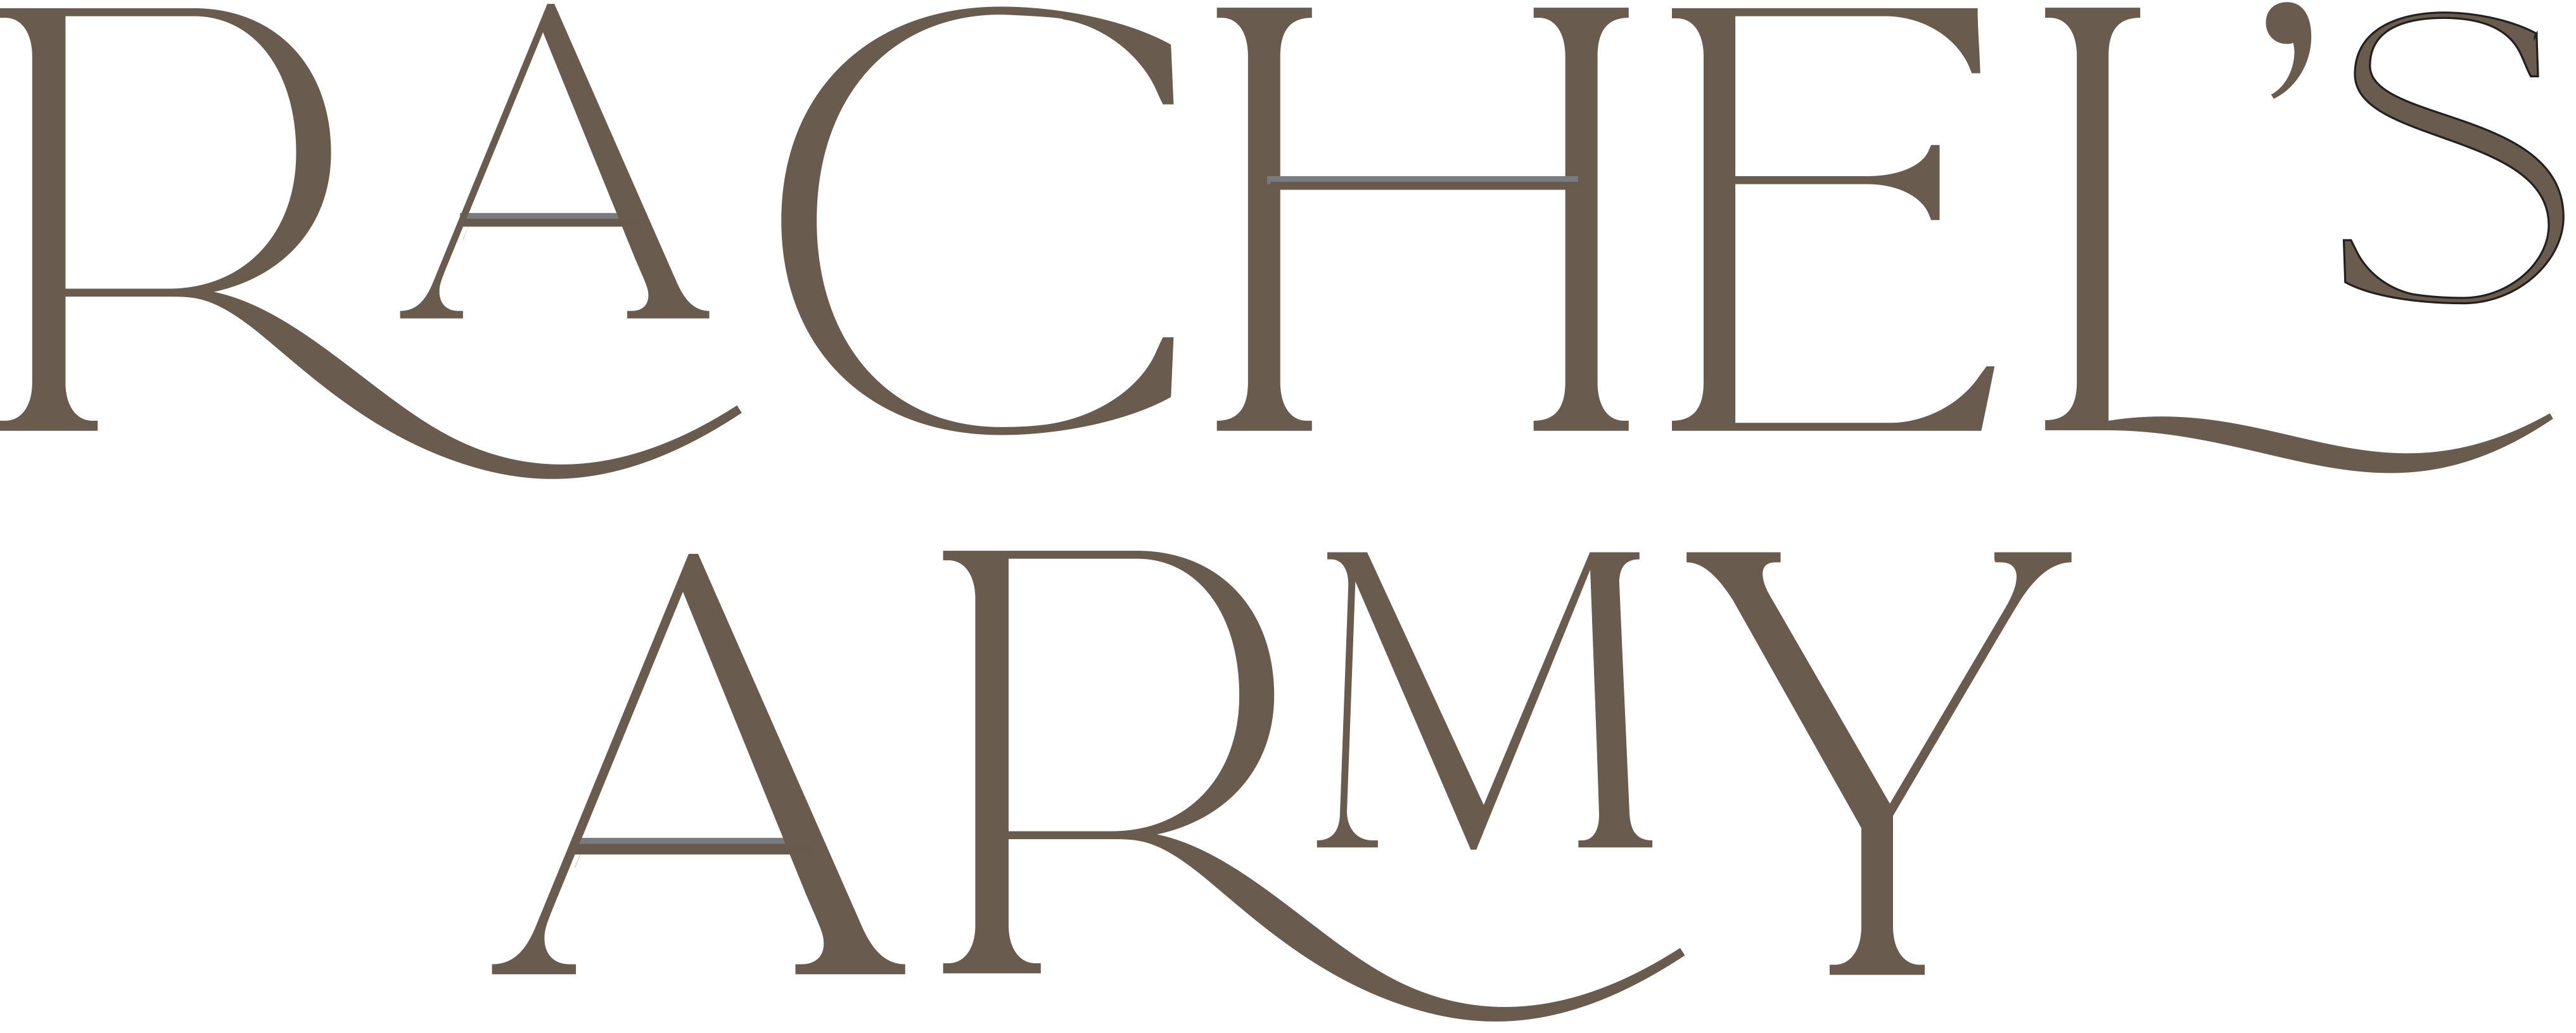 Rachels Army